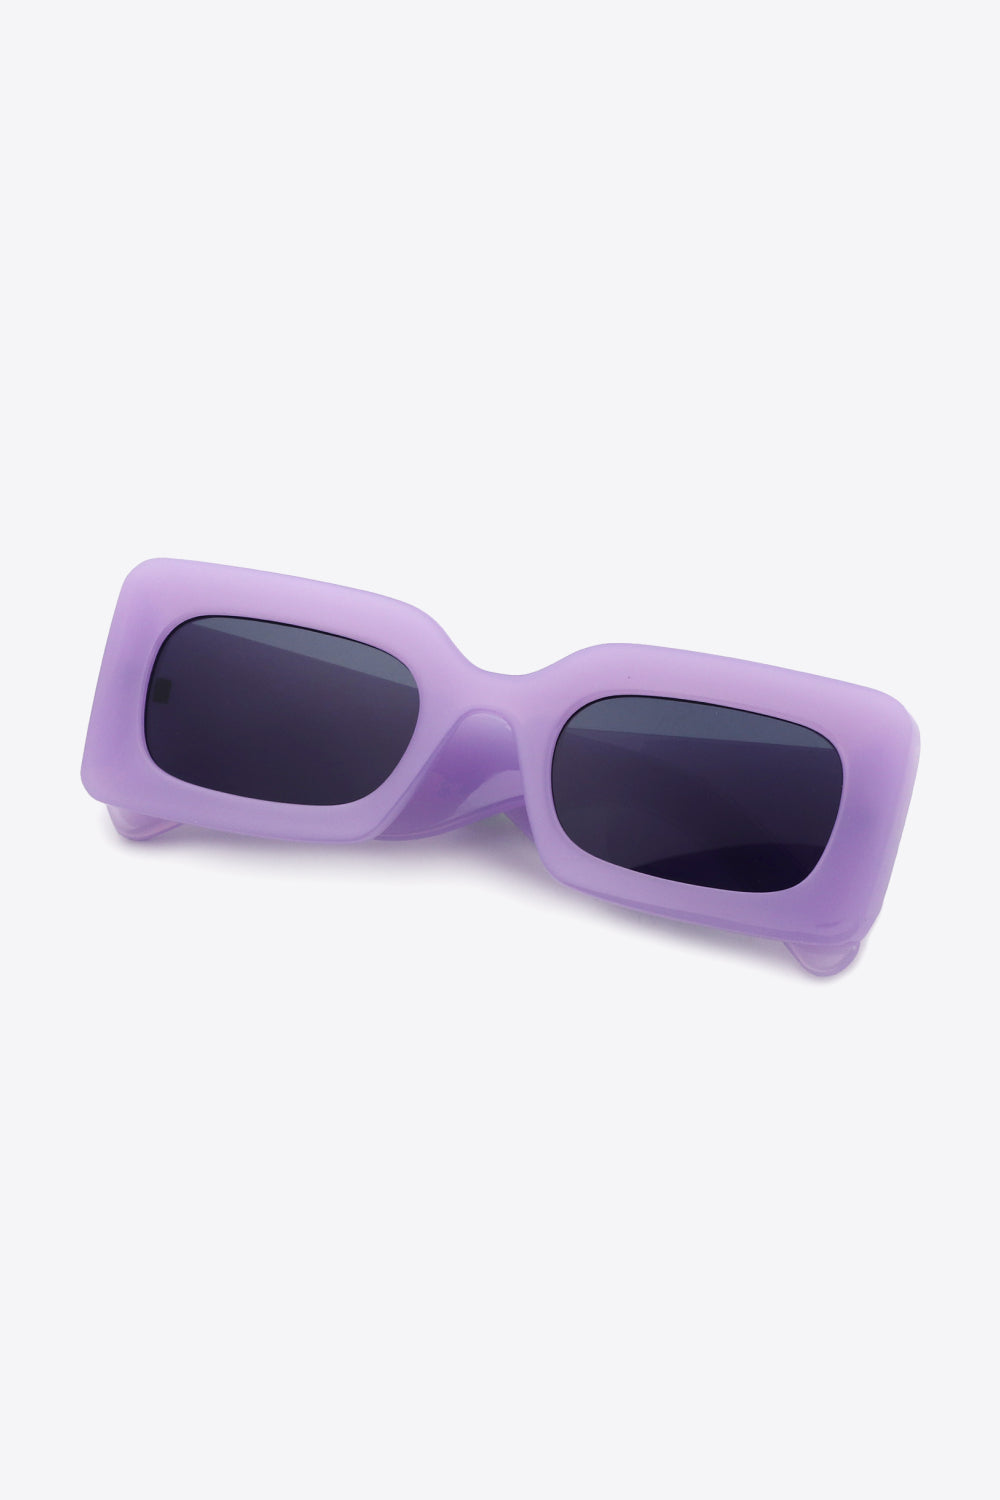 Polycarbonate Frame Rectangle Sunglasses - AllIn Computer